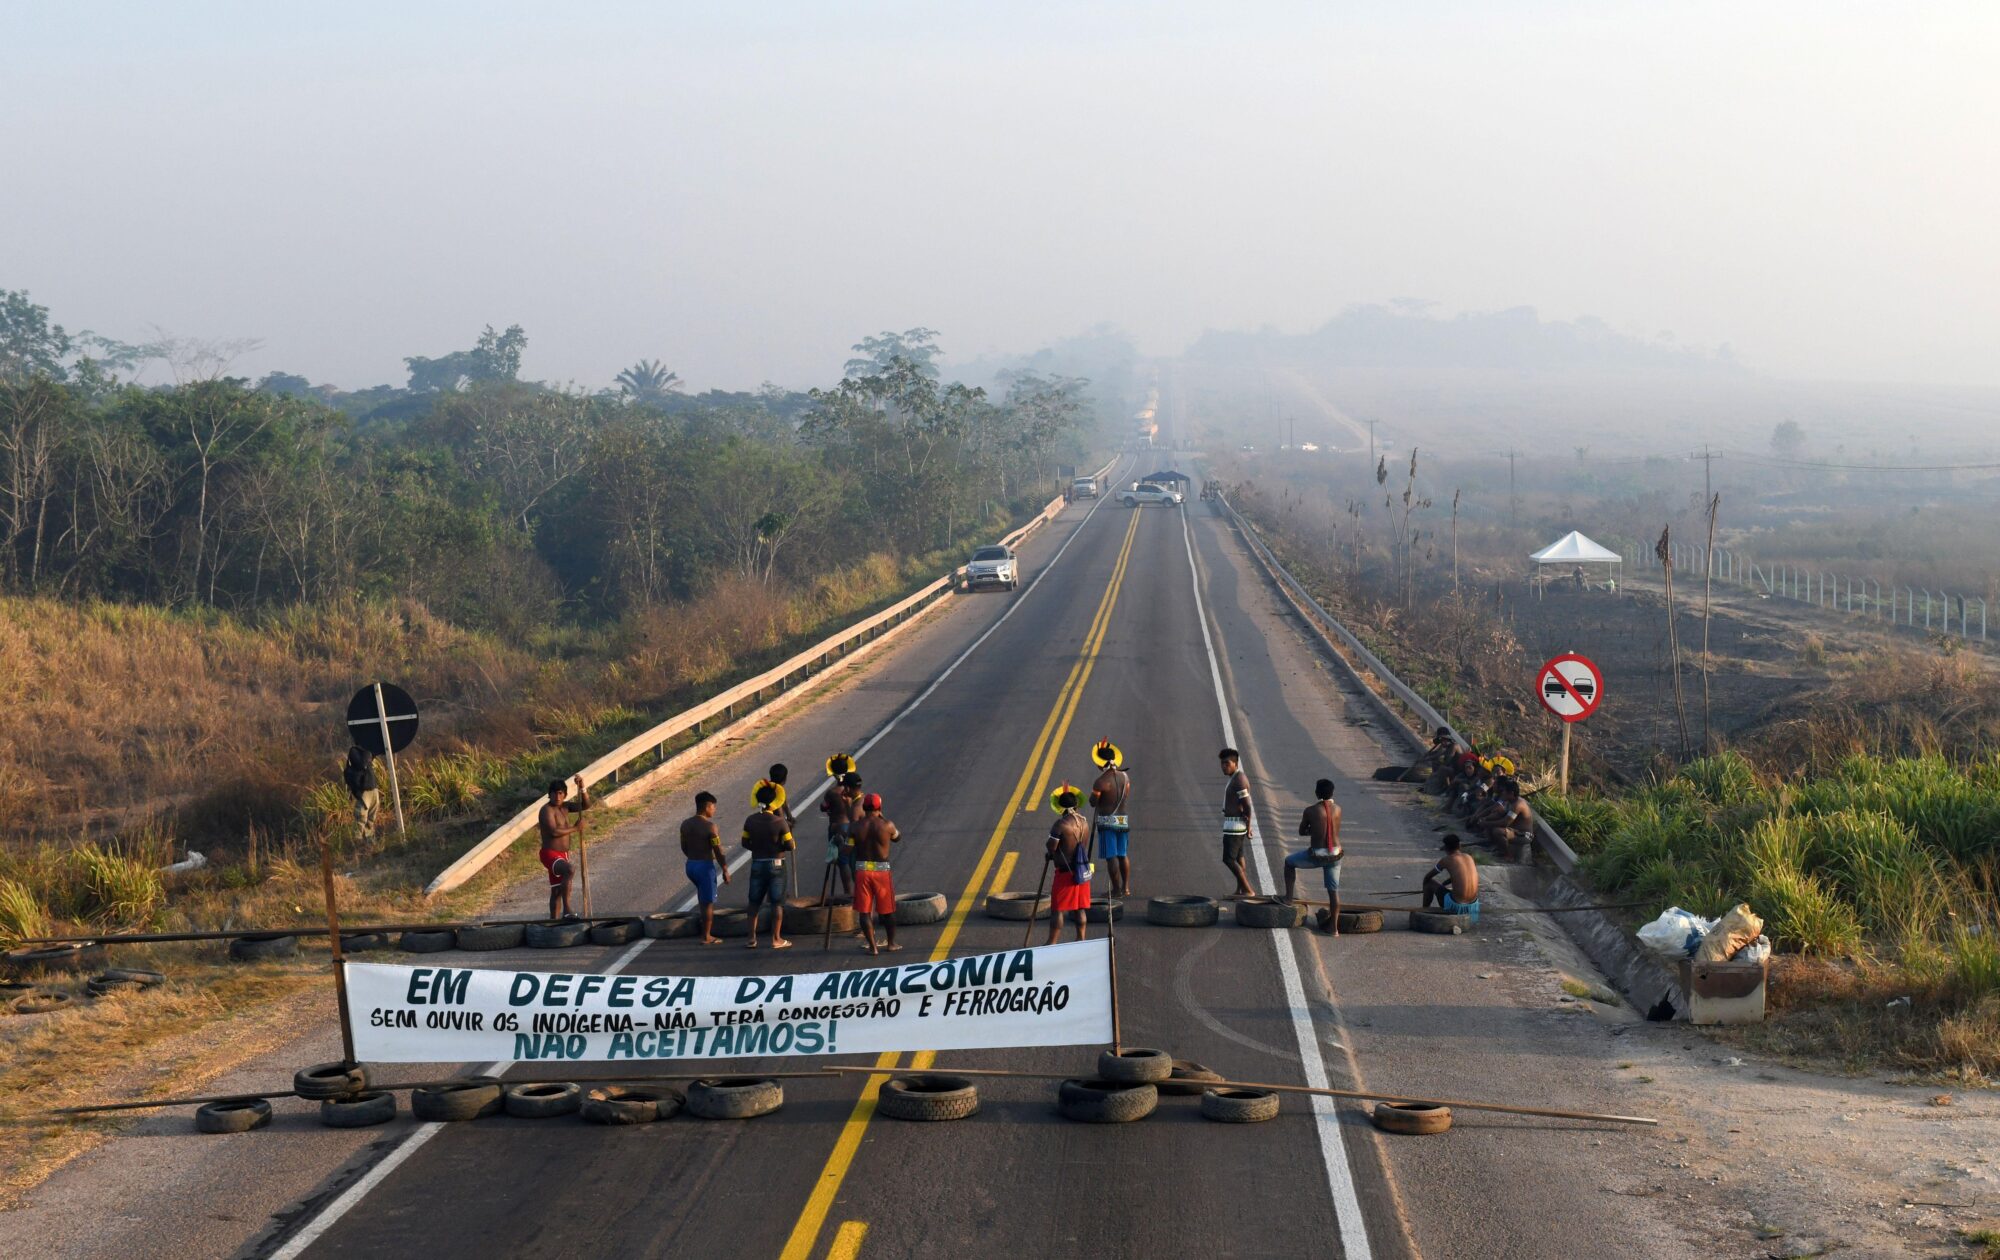 Protestors block the BR-163 highway in Pará state in Brazil